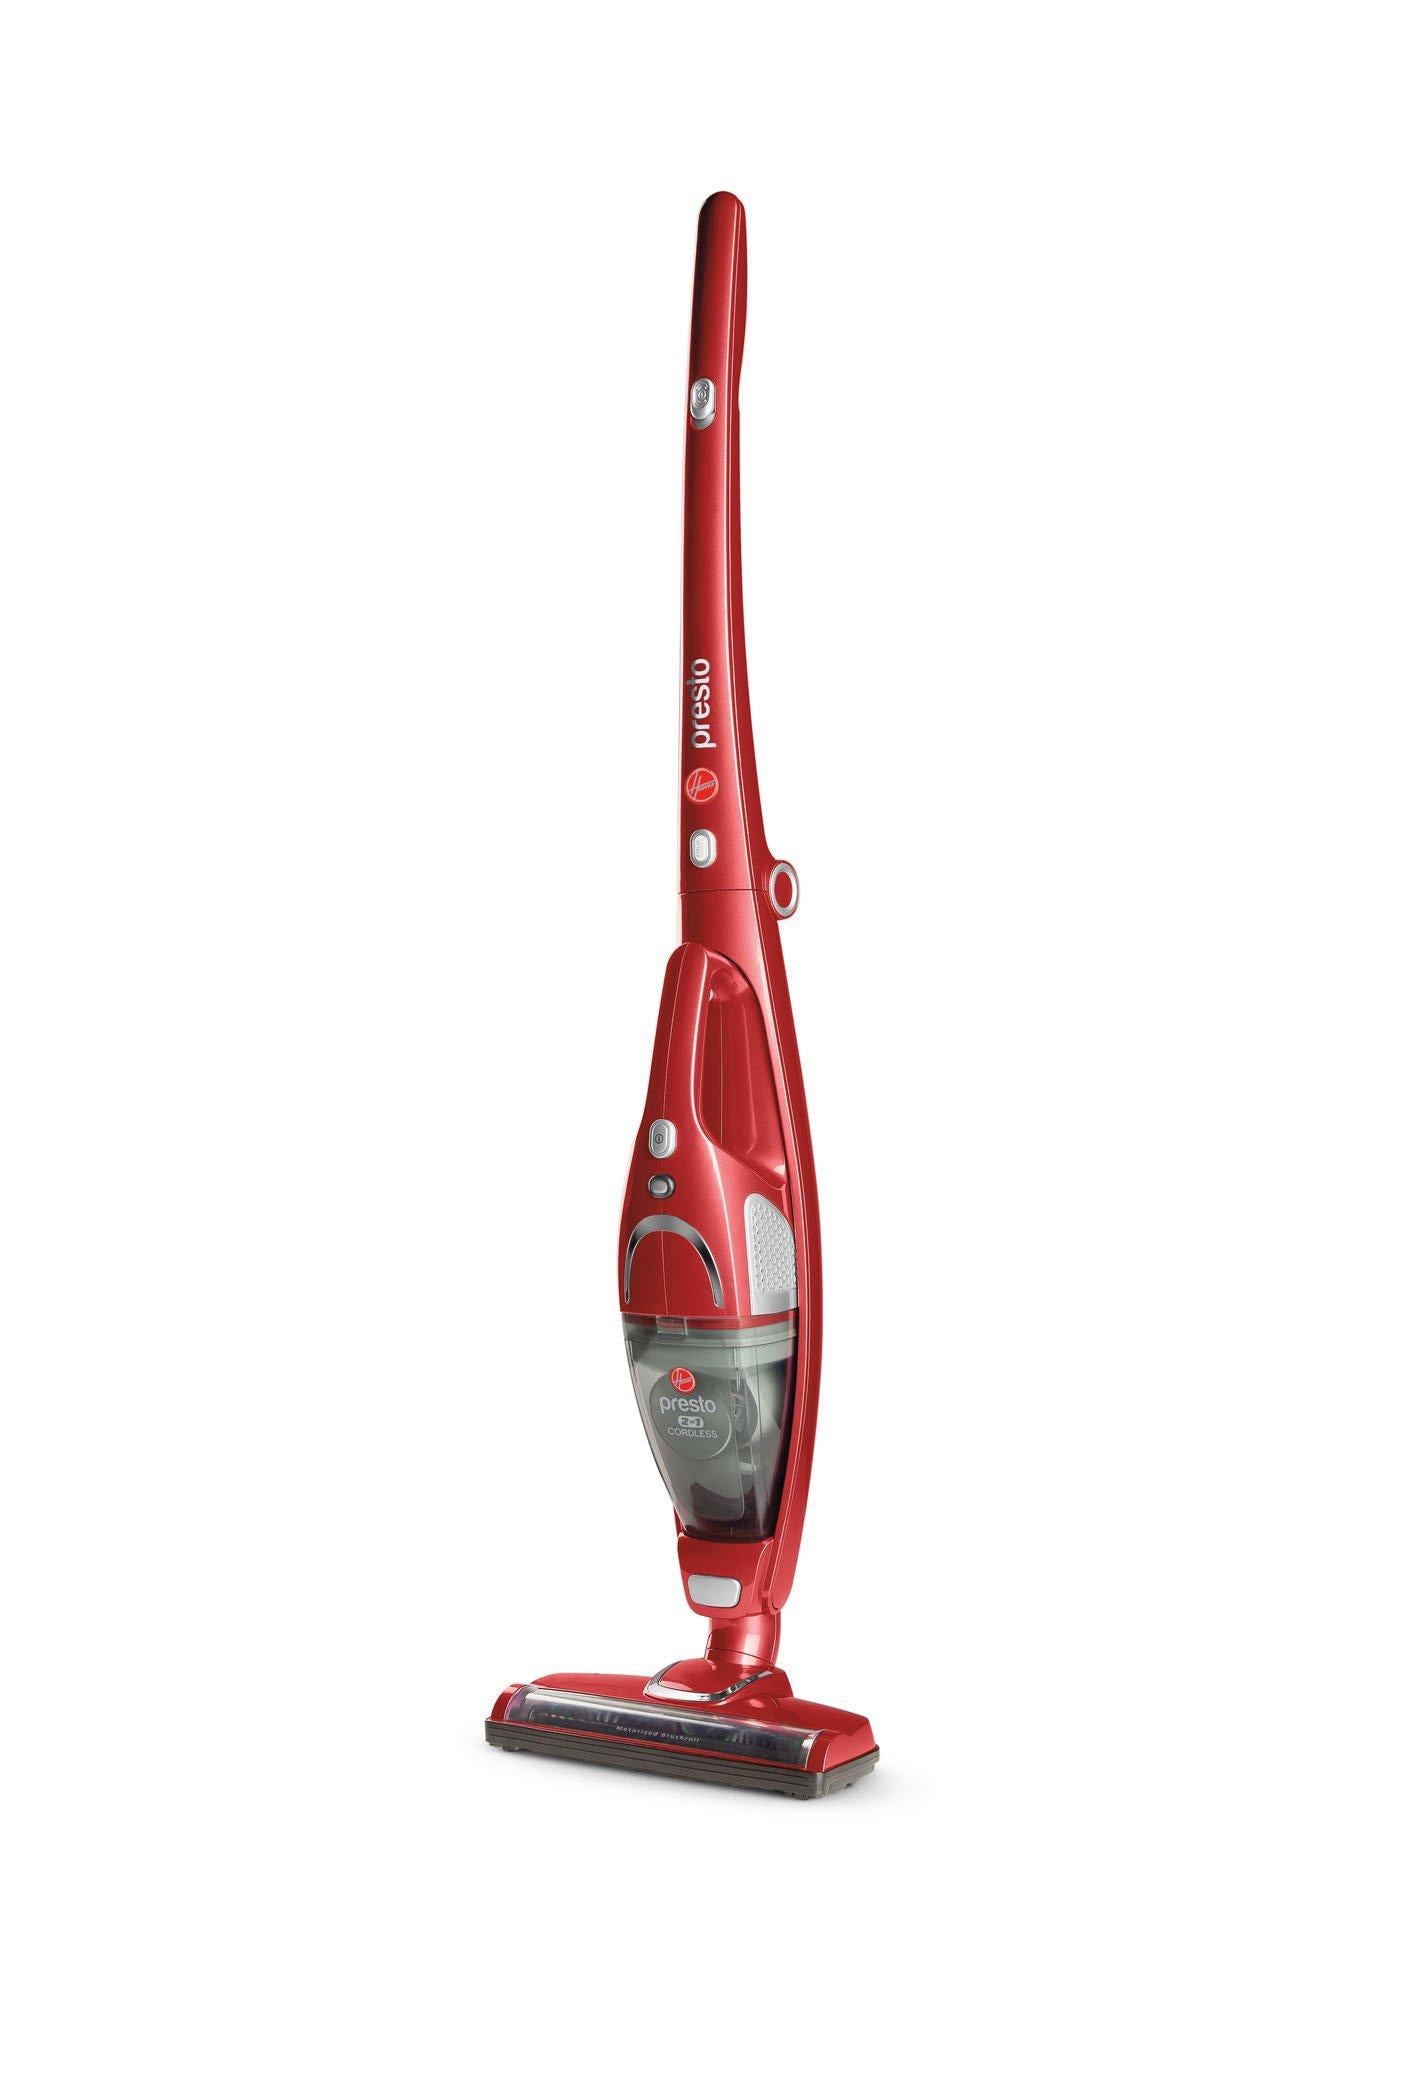 Reconditioned Presto 2-in-1 Cordless Stick Vacuum